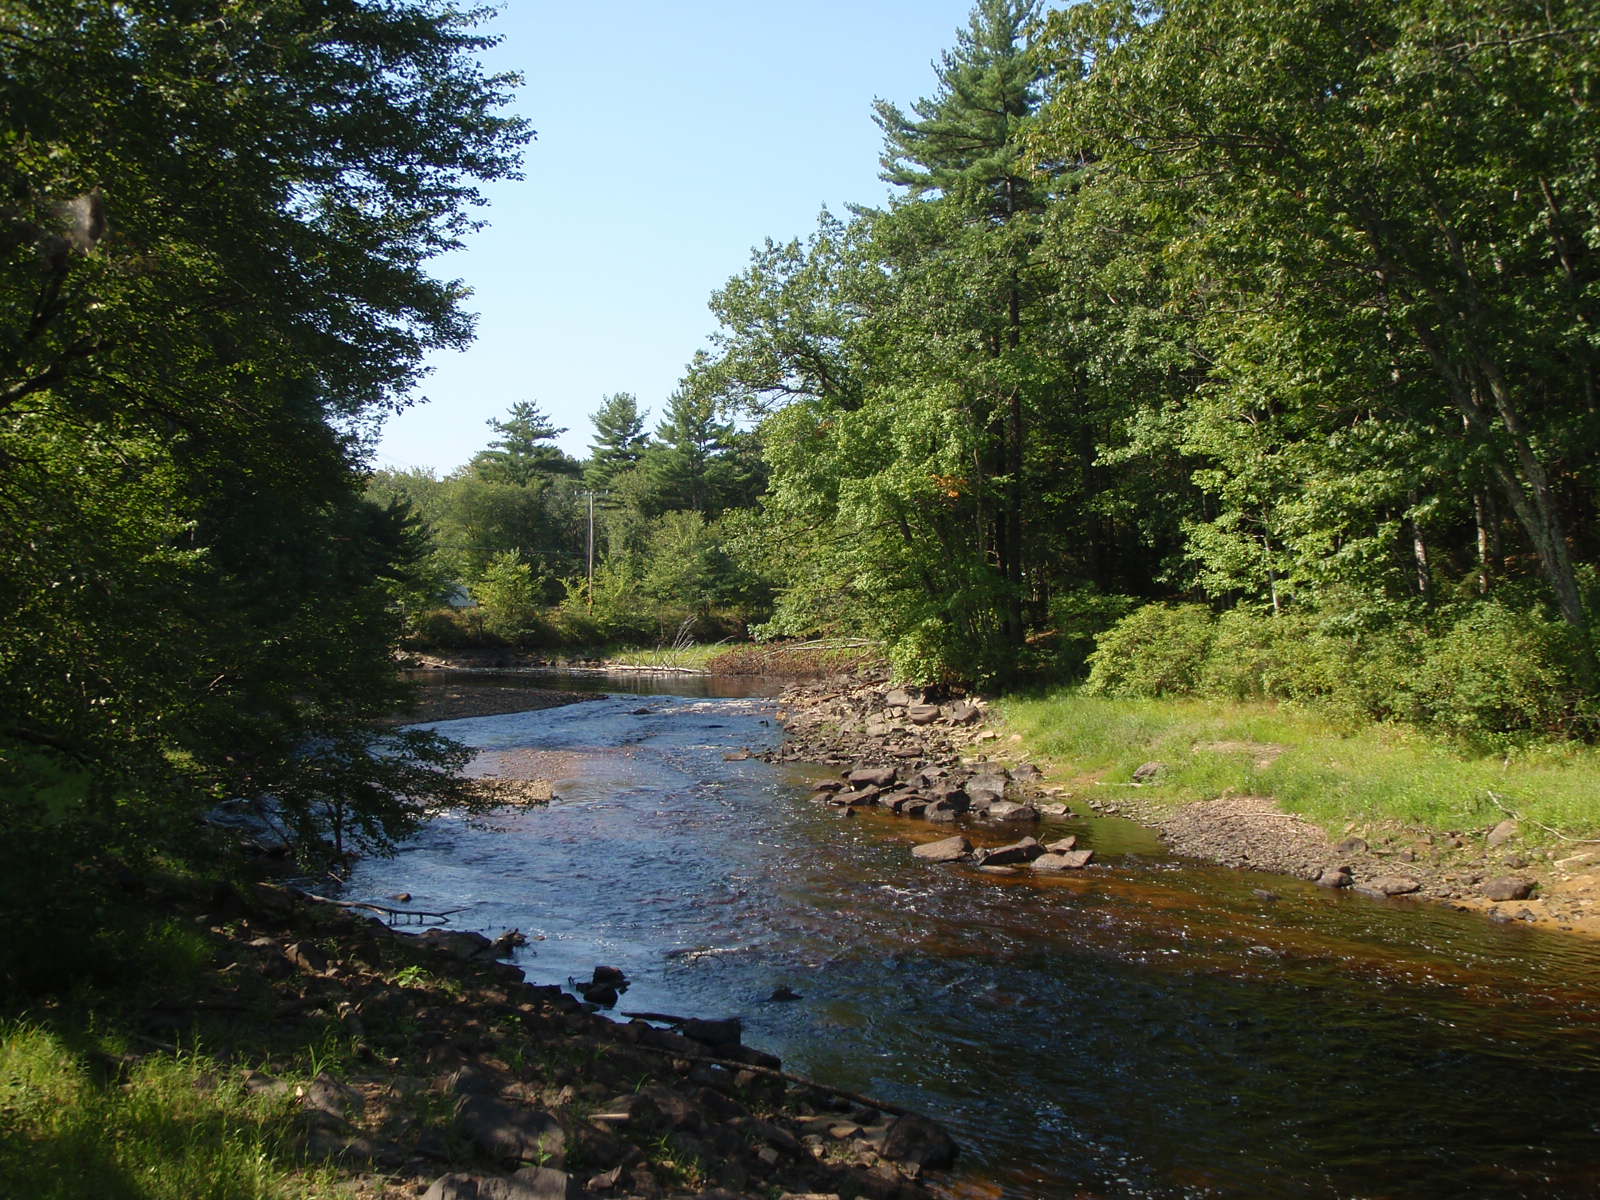 Lamprey River